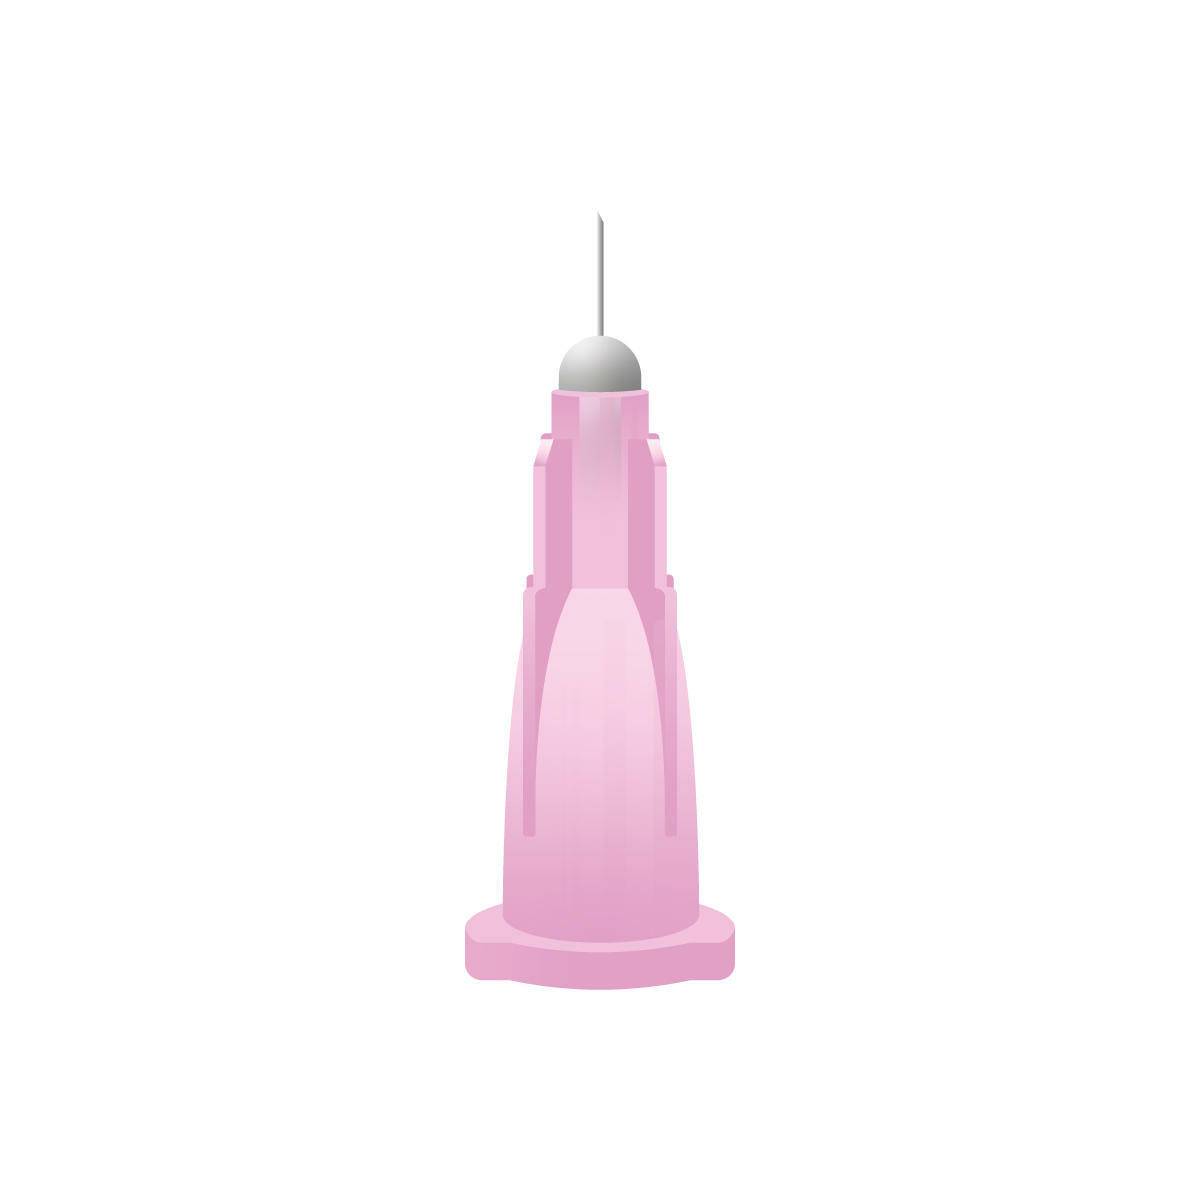 32g Pink 4mm Meso-relle Mesotherapy Needle - UKMEDI